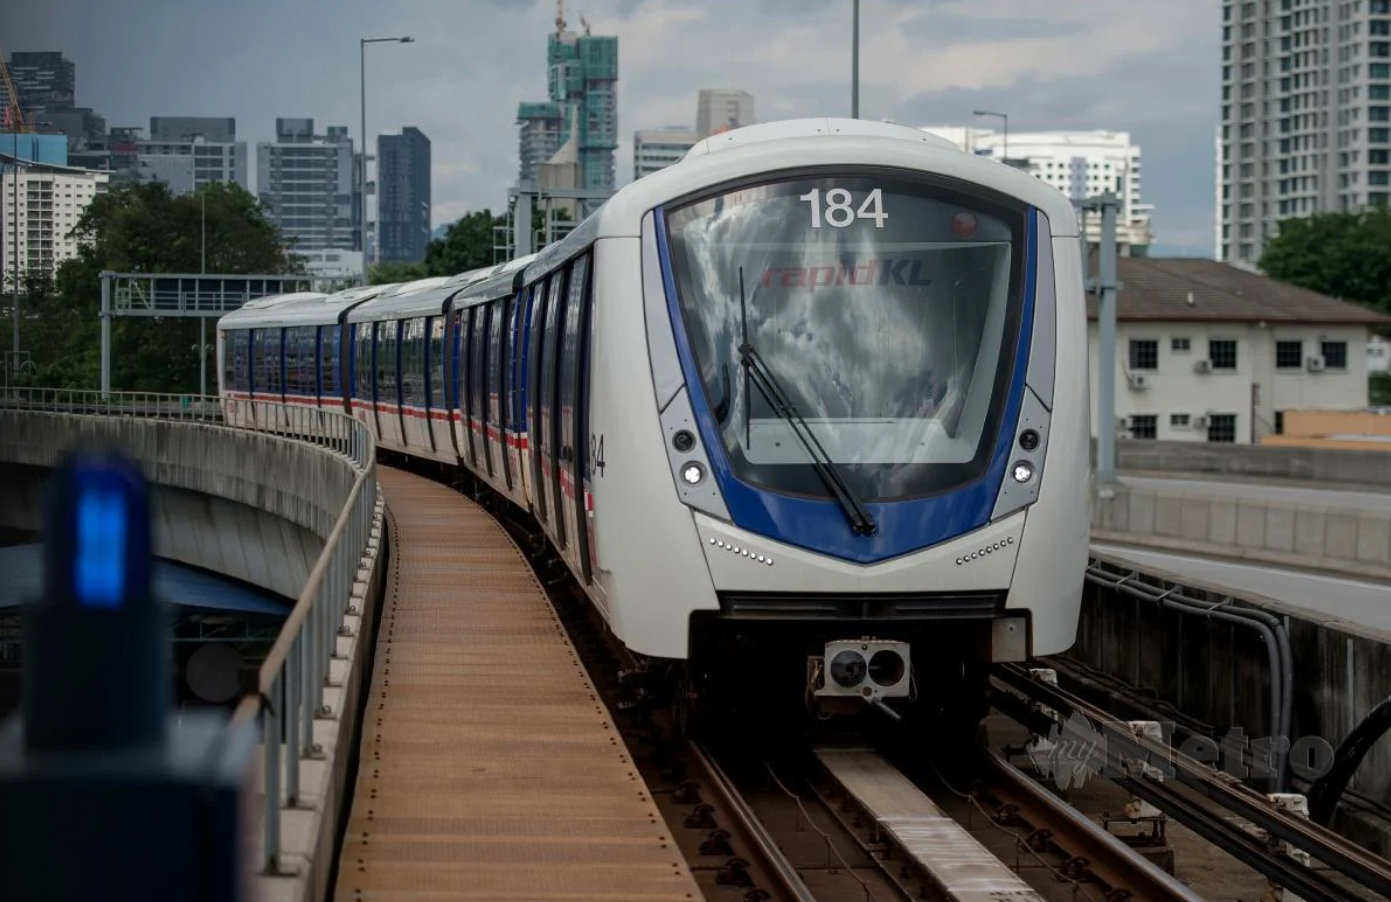 Commuters will get to enjoy a week's worth of free rides on the Kelana Jaya LRT. Image credit: Harian Metro